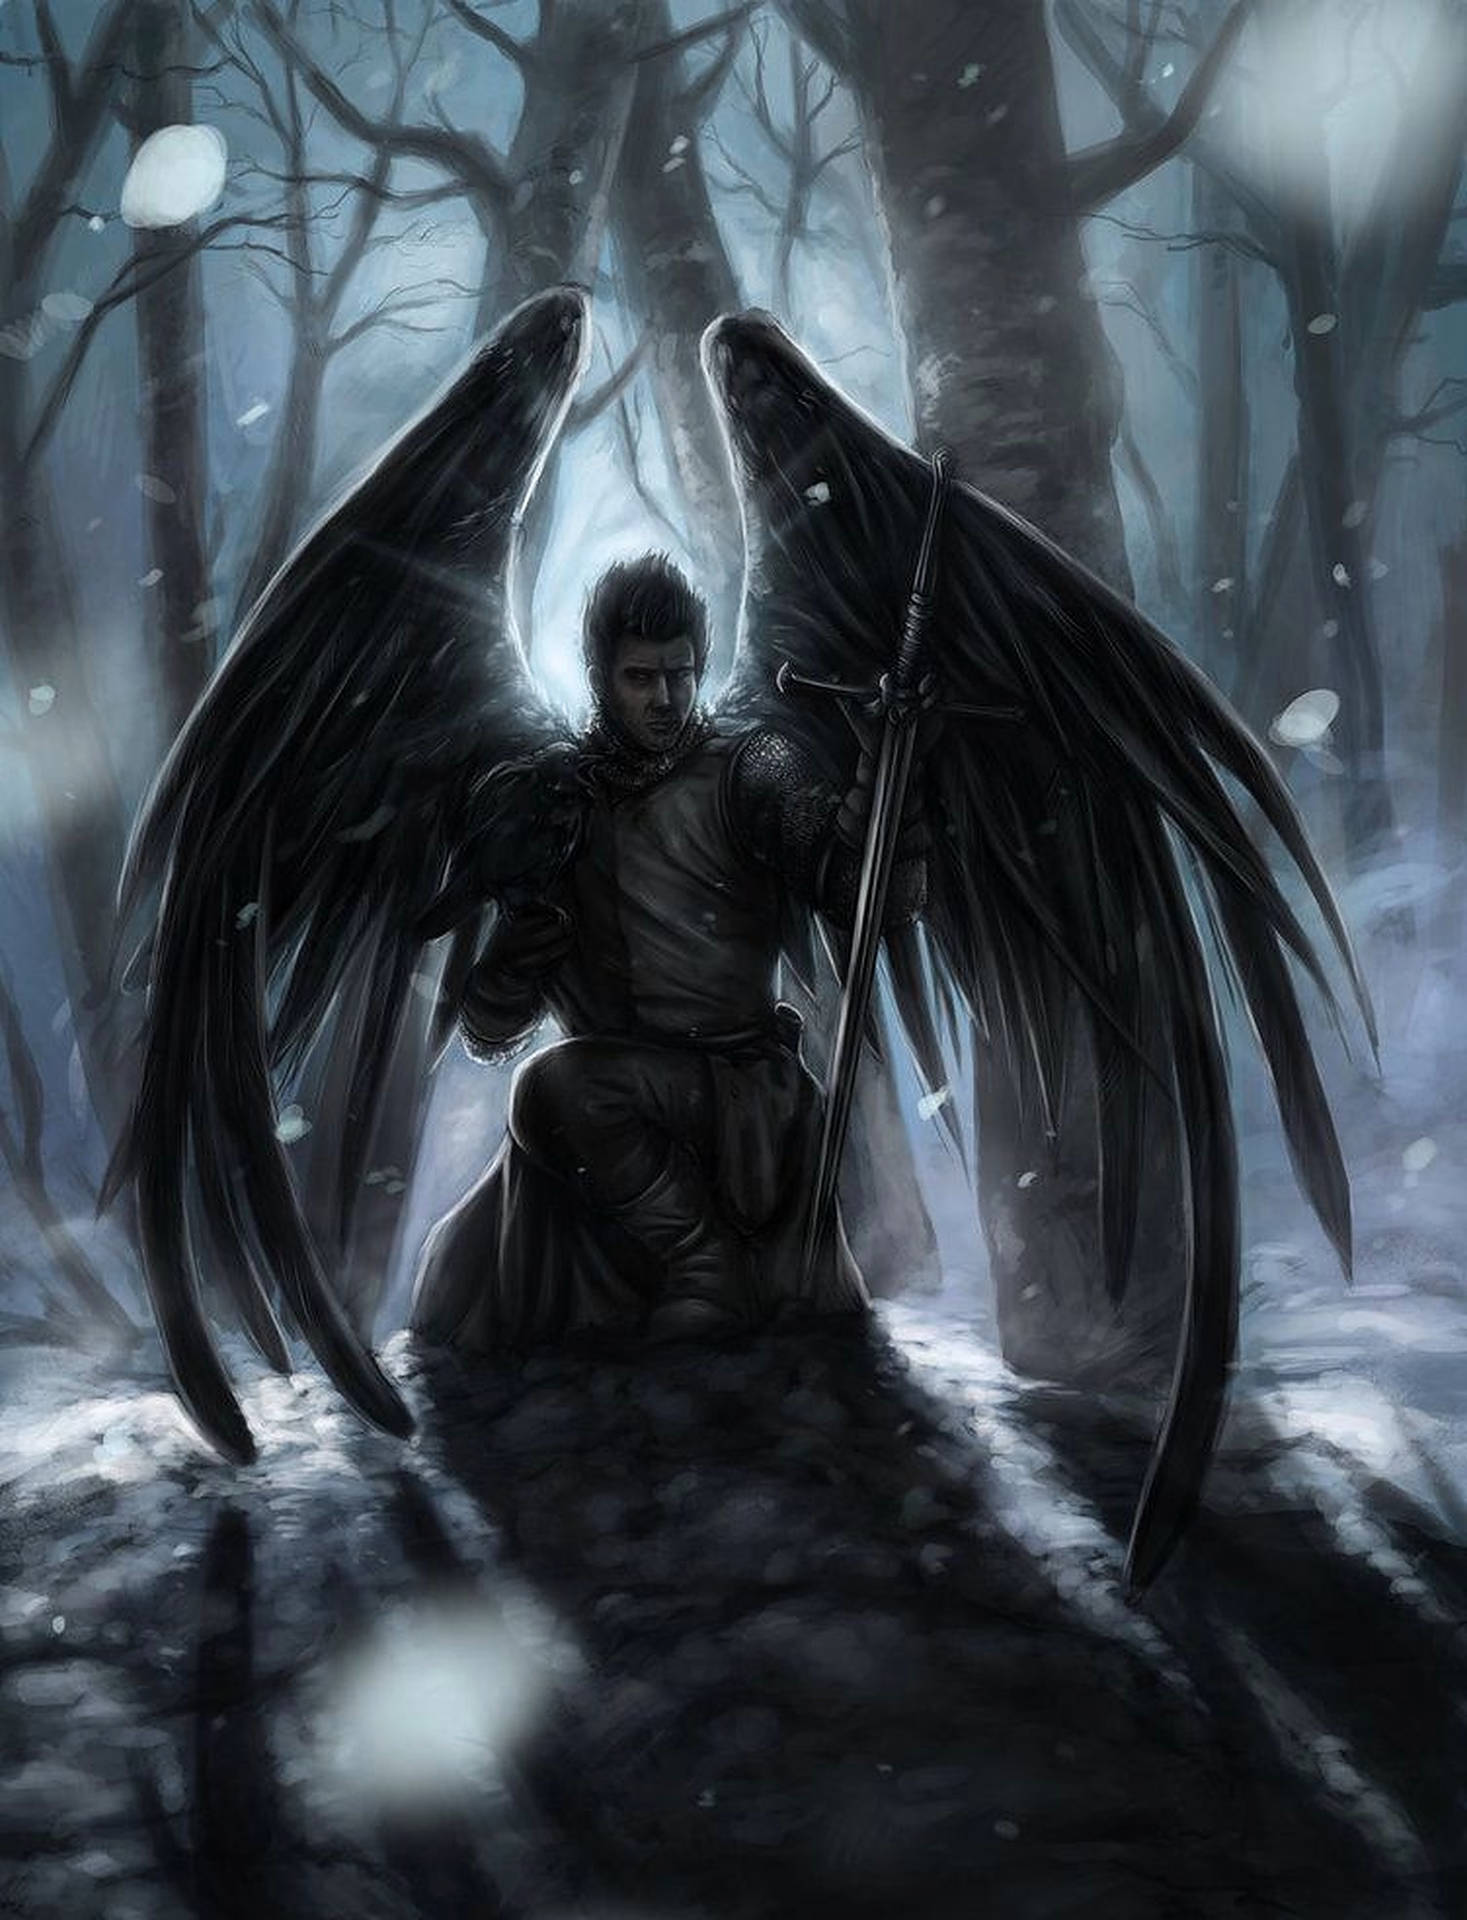 Free Dark Angel Wallpaper Downloads, [100+] Dark Angel Wallpapers for FREE  